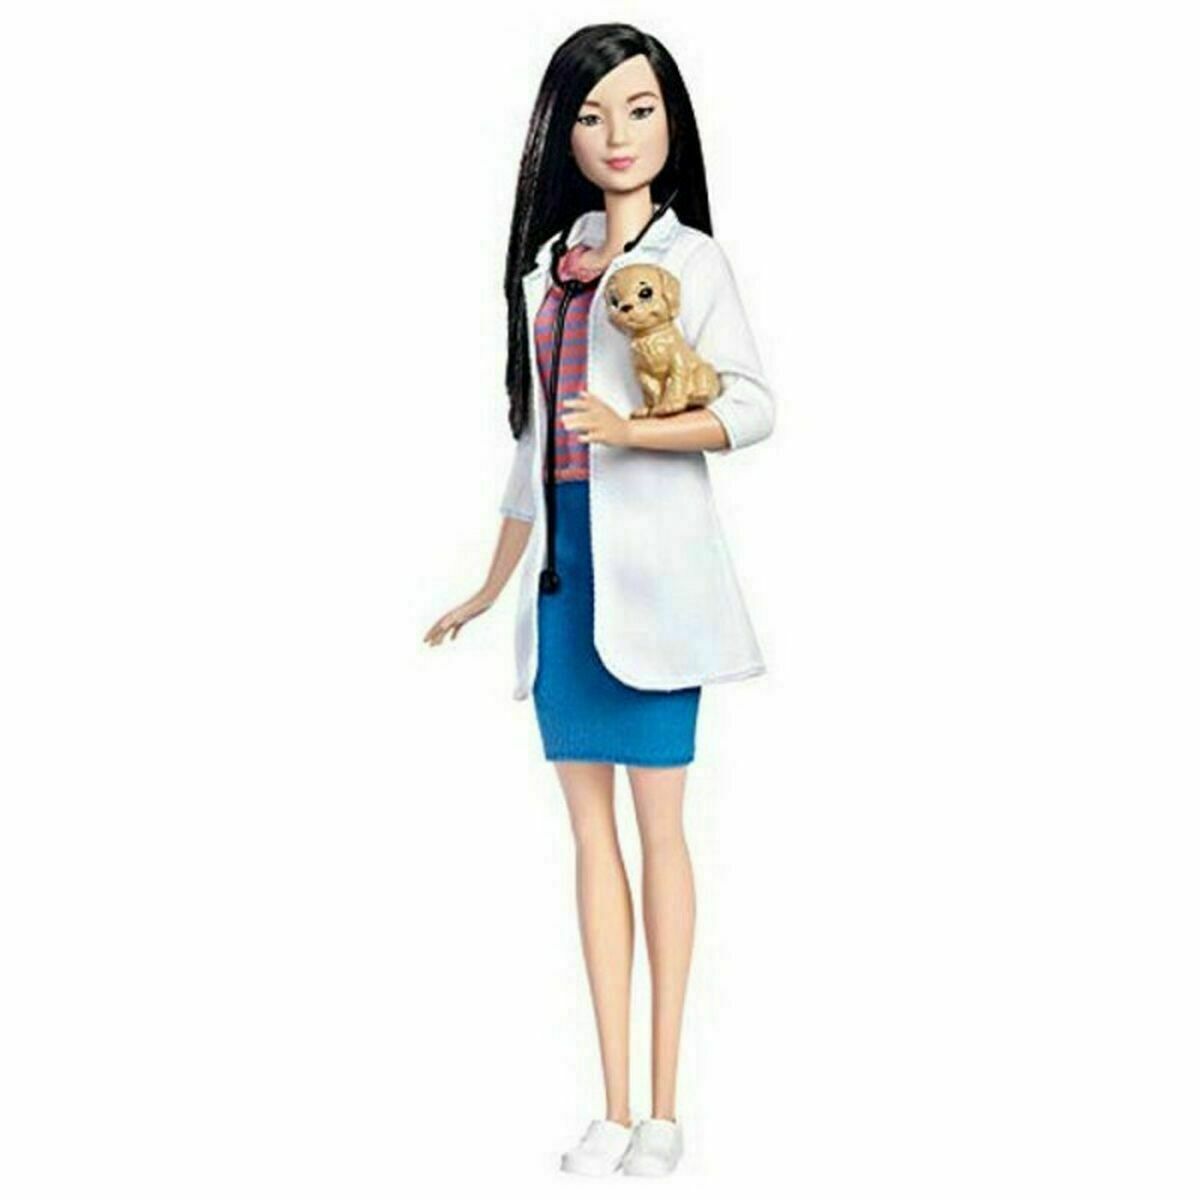 Muñeca Barbie You Can Be Barbie GTW39